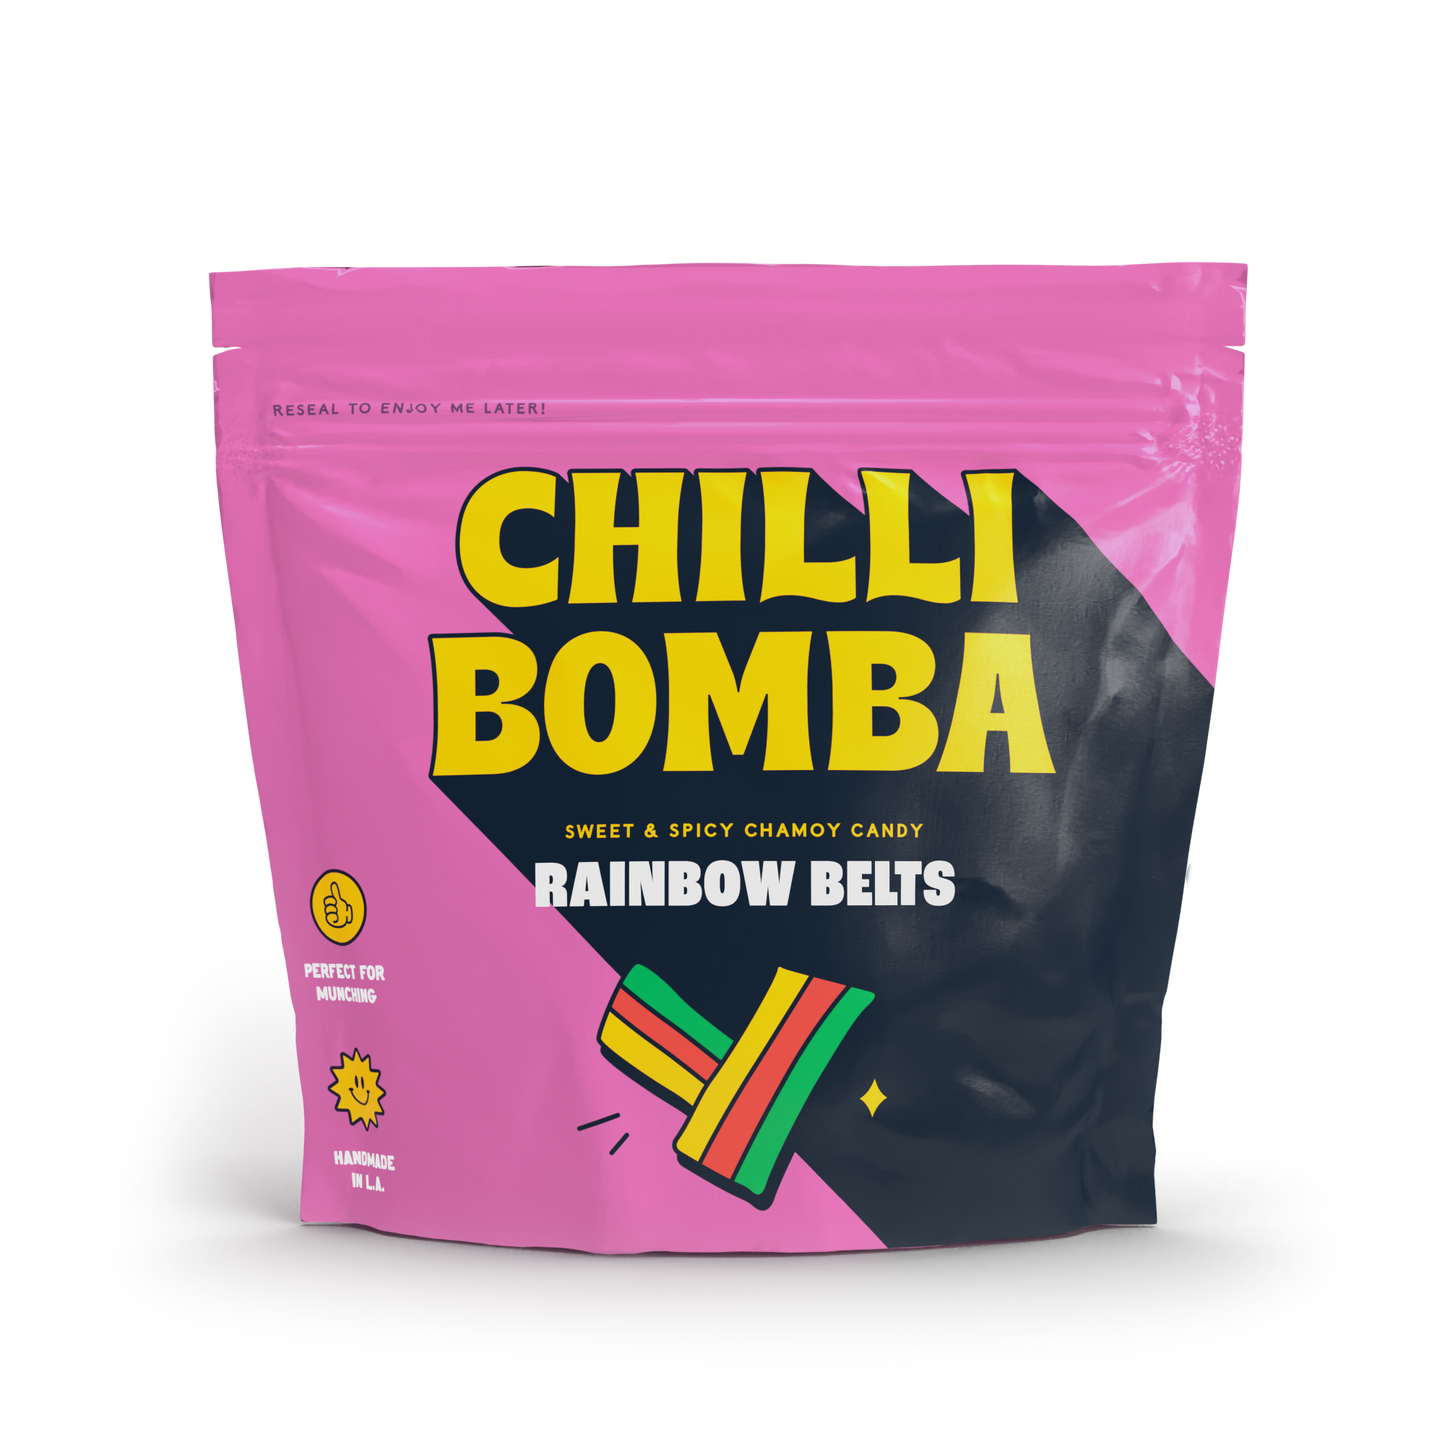 Chilli Bomba Rainbow Belts 8oz